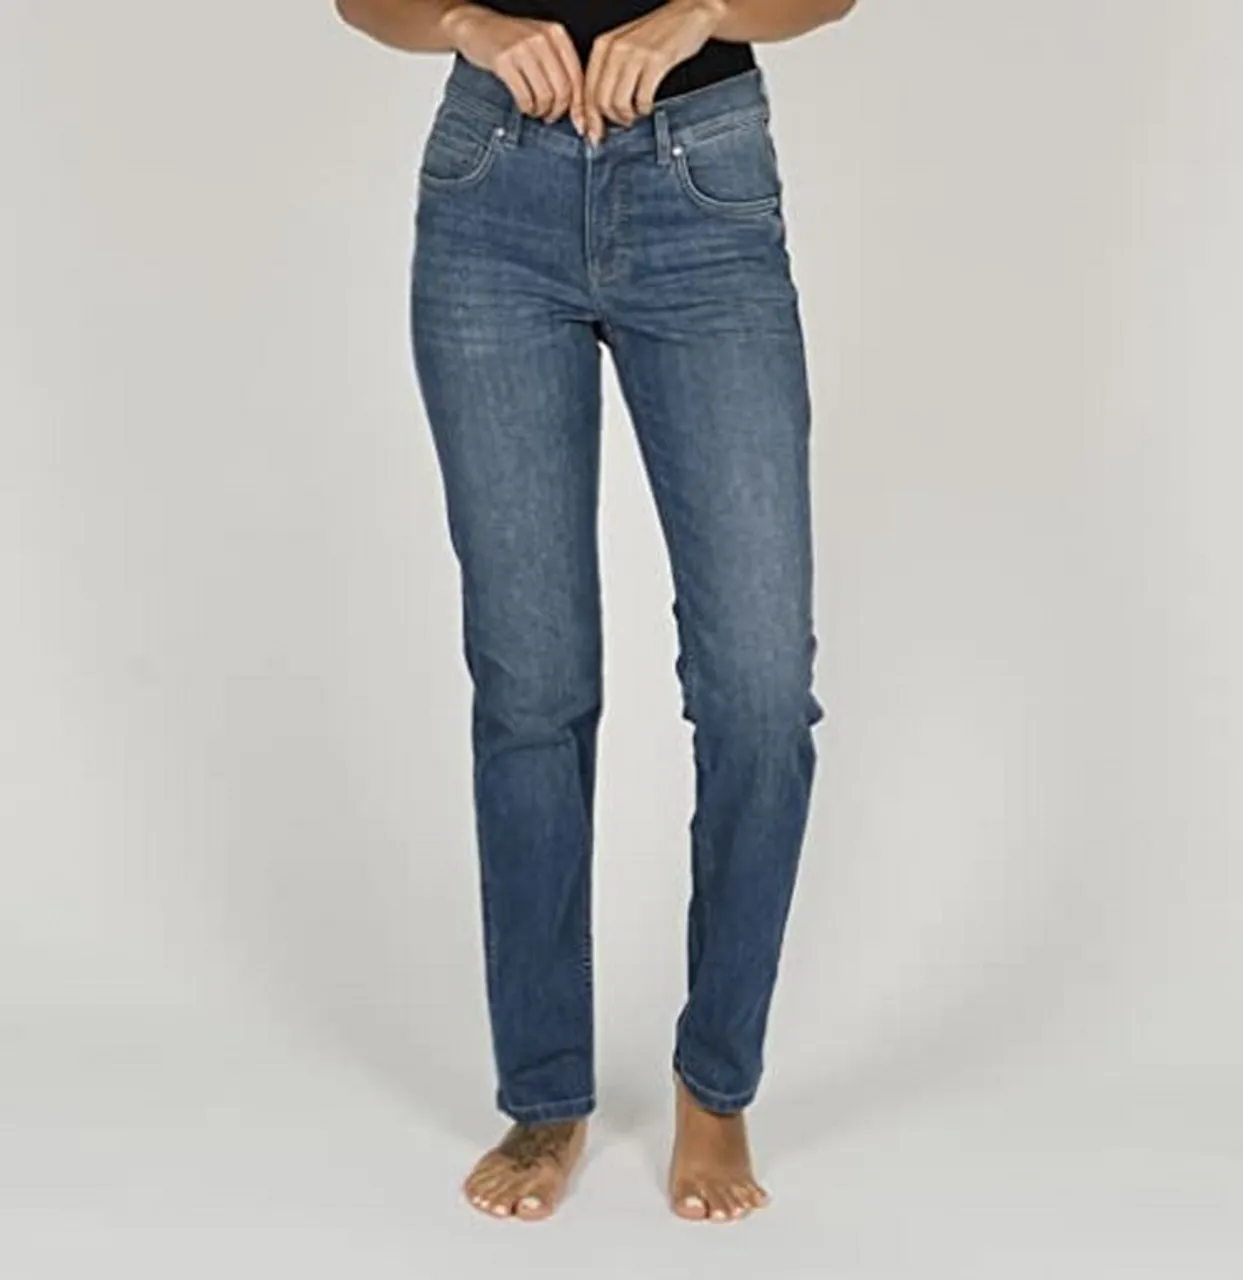 Slim Fit Jeans Cici, mid blue used